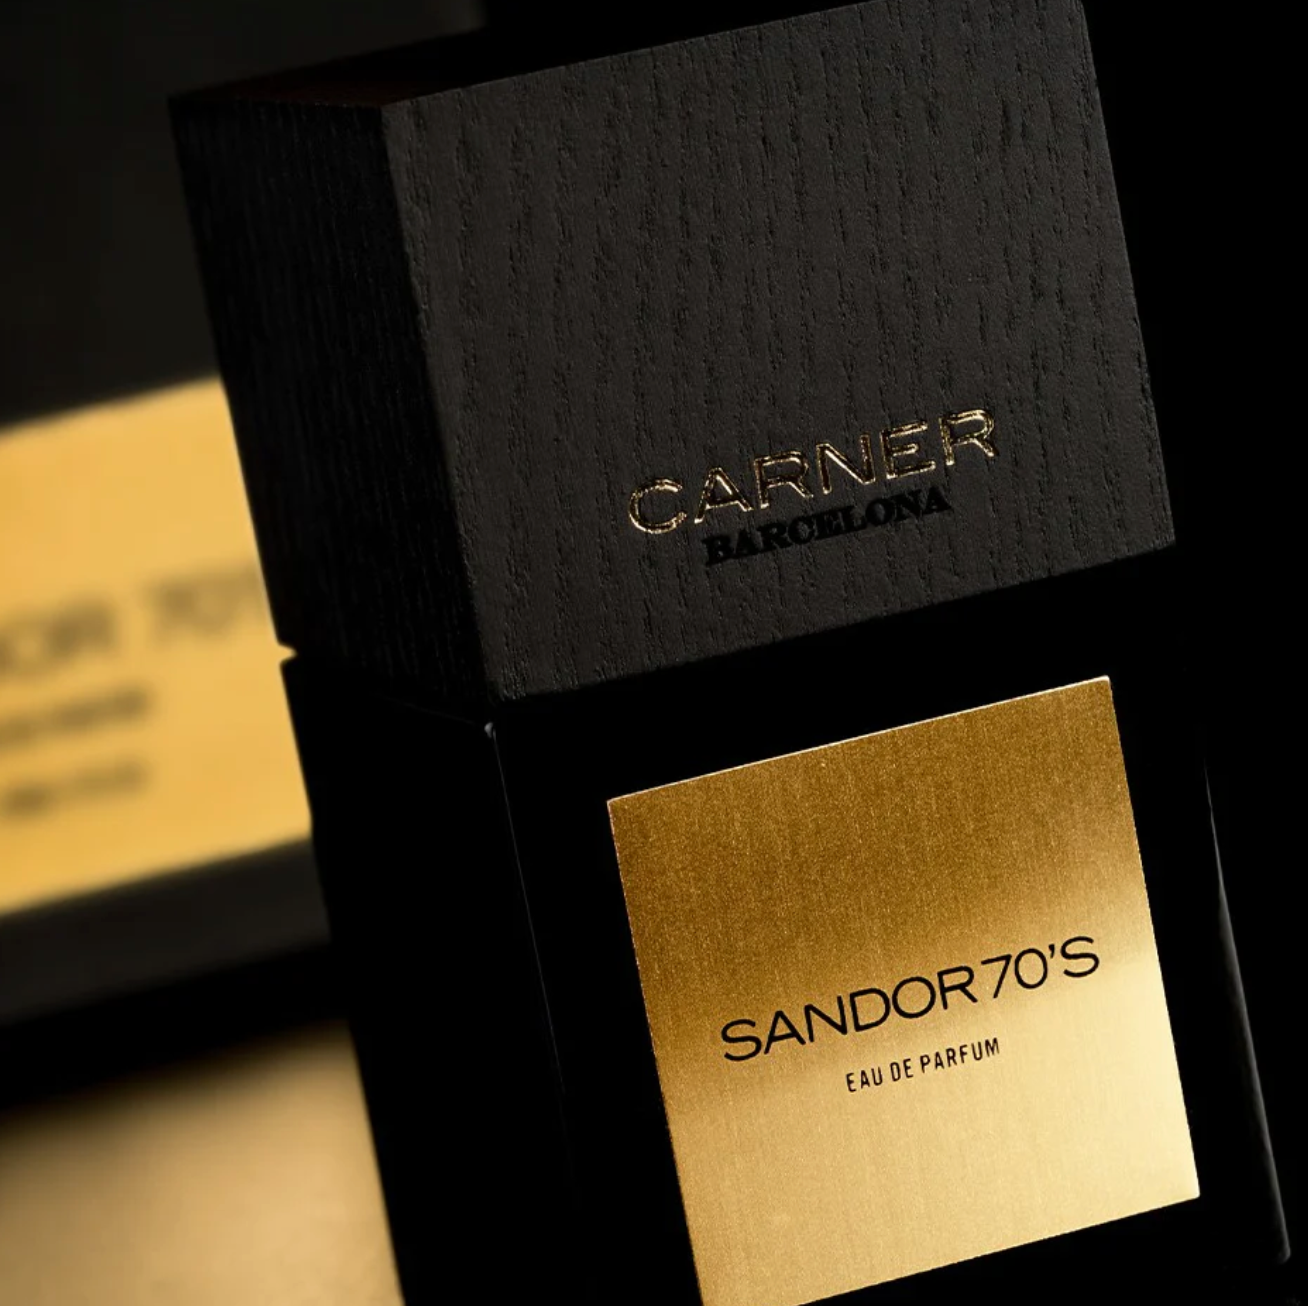 Carner Sandor70's Black Edition Parfum